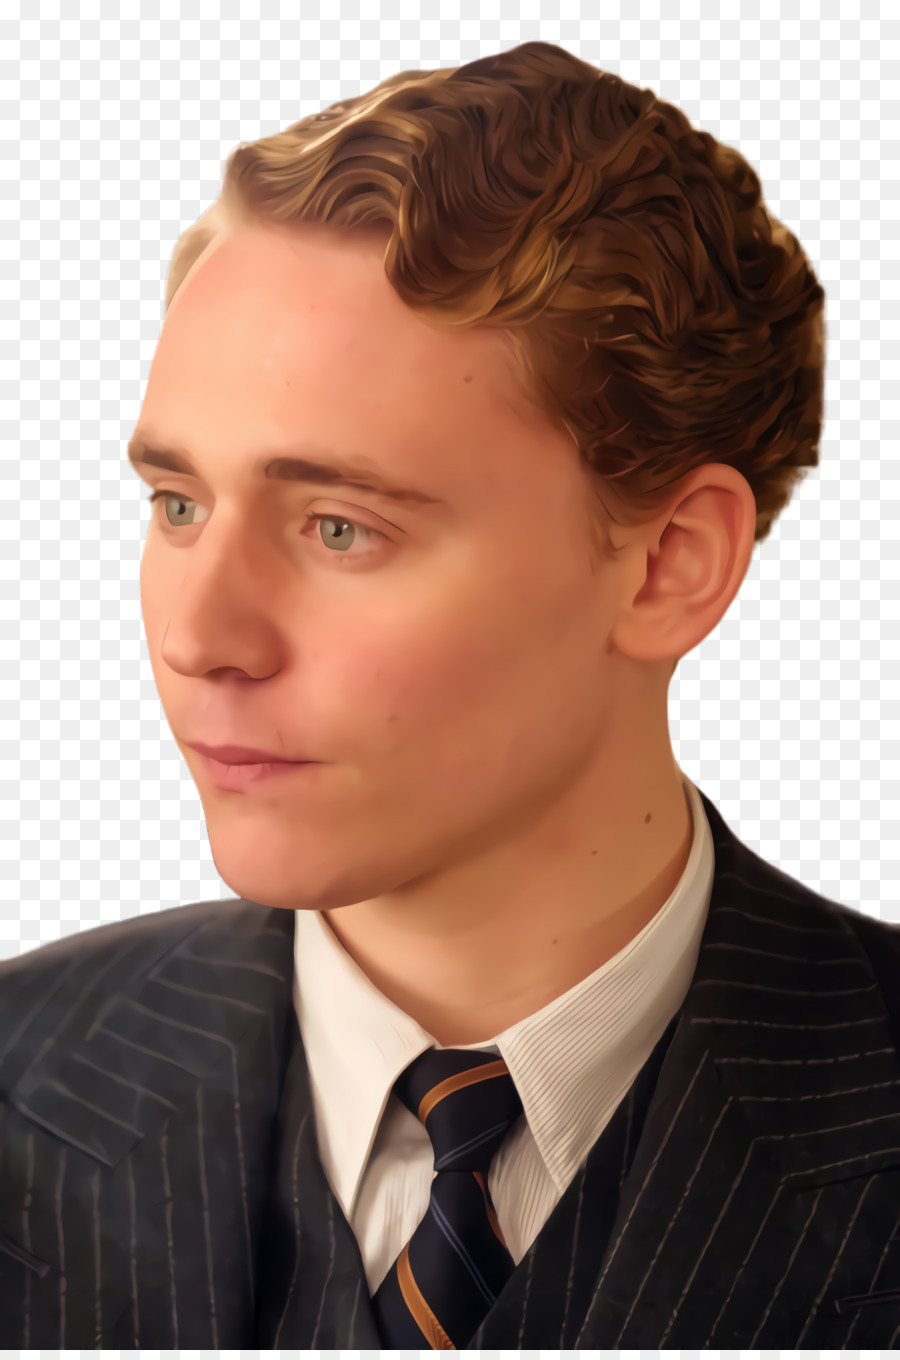 Tom hiddleston - 